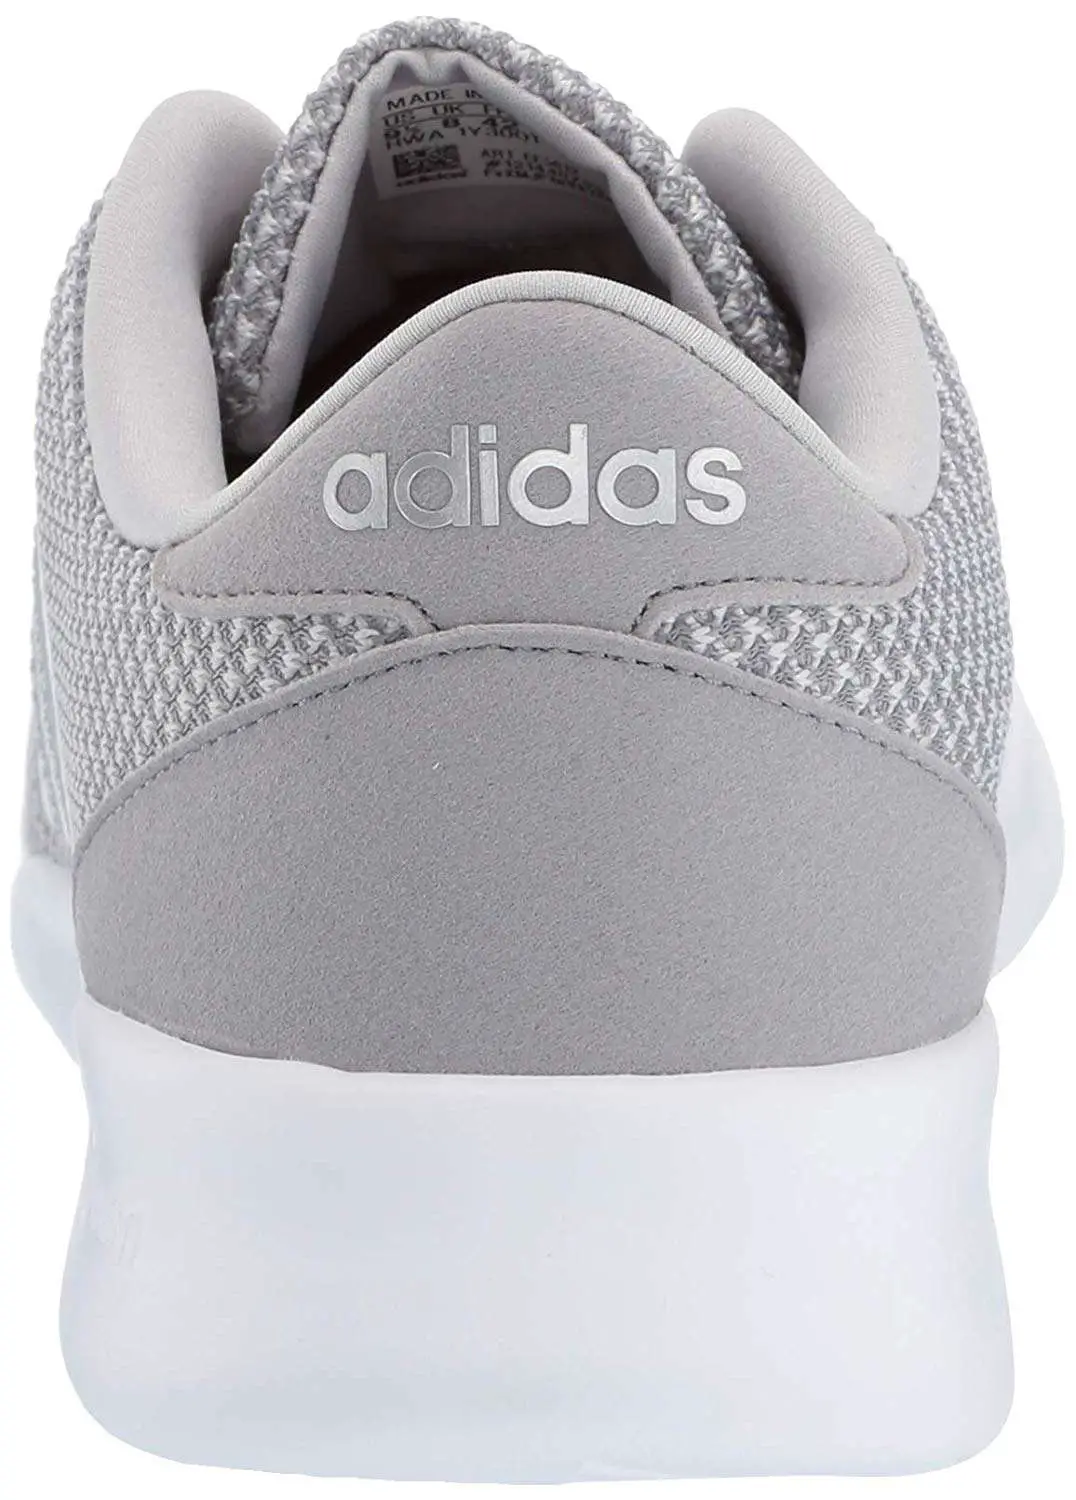 Adidas Womens Cloudfoam QT Racer Low Top Lace Up Walking Shoes, Grey ...